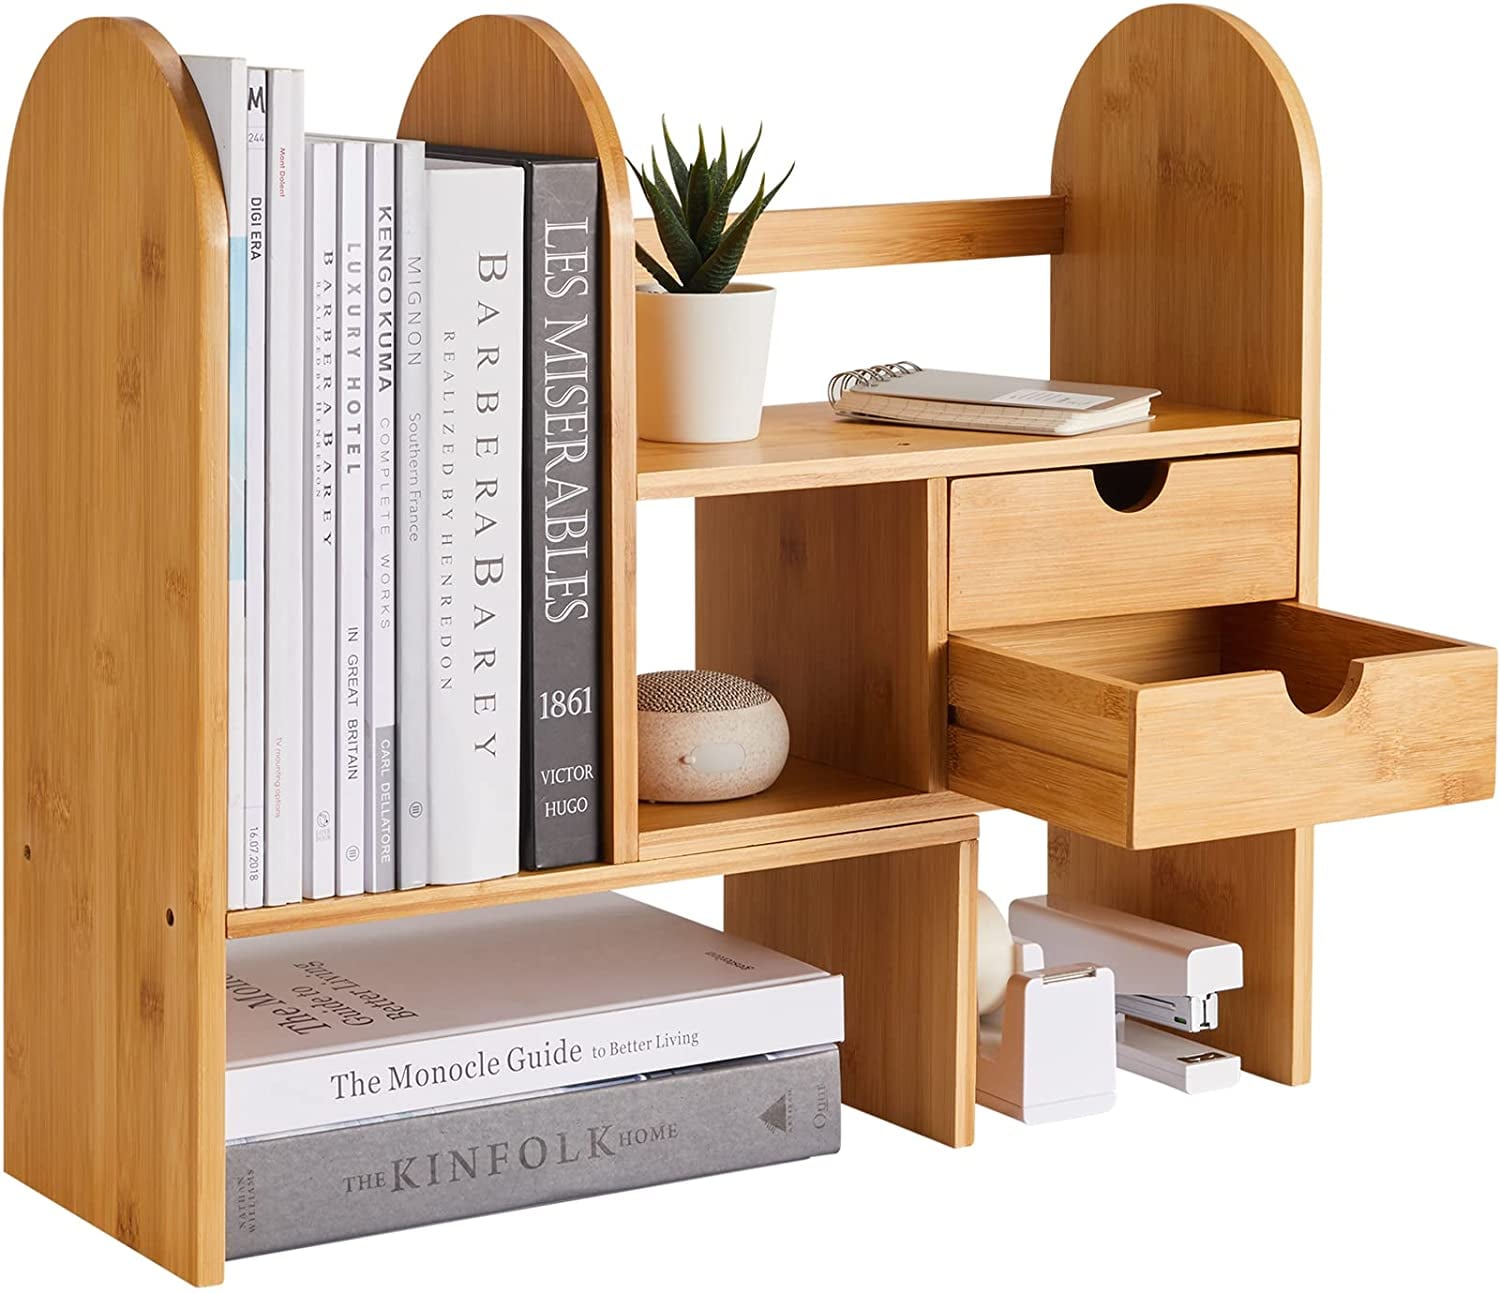 luosh Mesh Magazine File Rack Holder Single Layer Desk Shelf Book Storage for Office Home Students